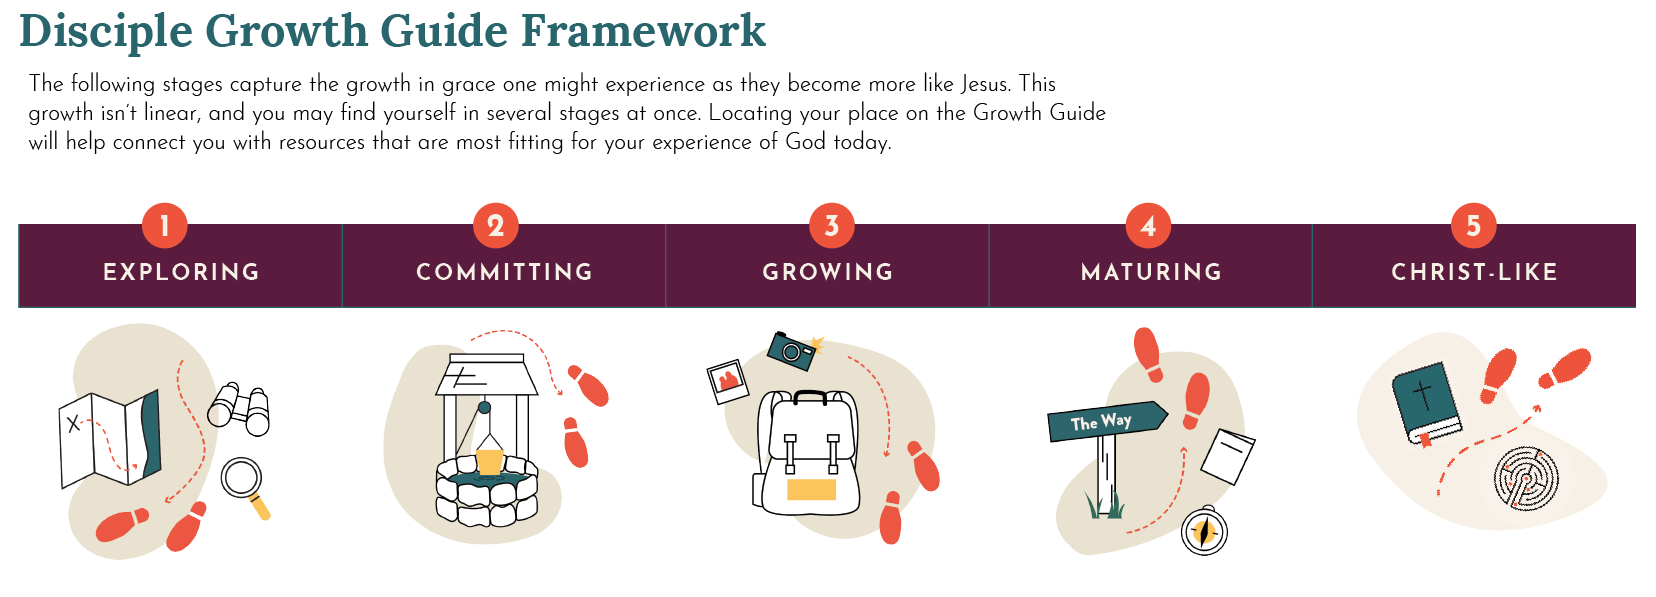 Disciple Growth Guide Framework